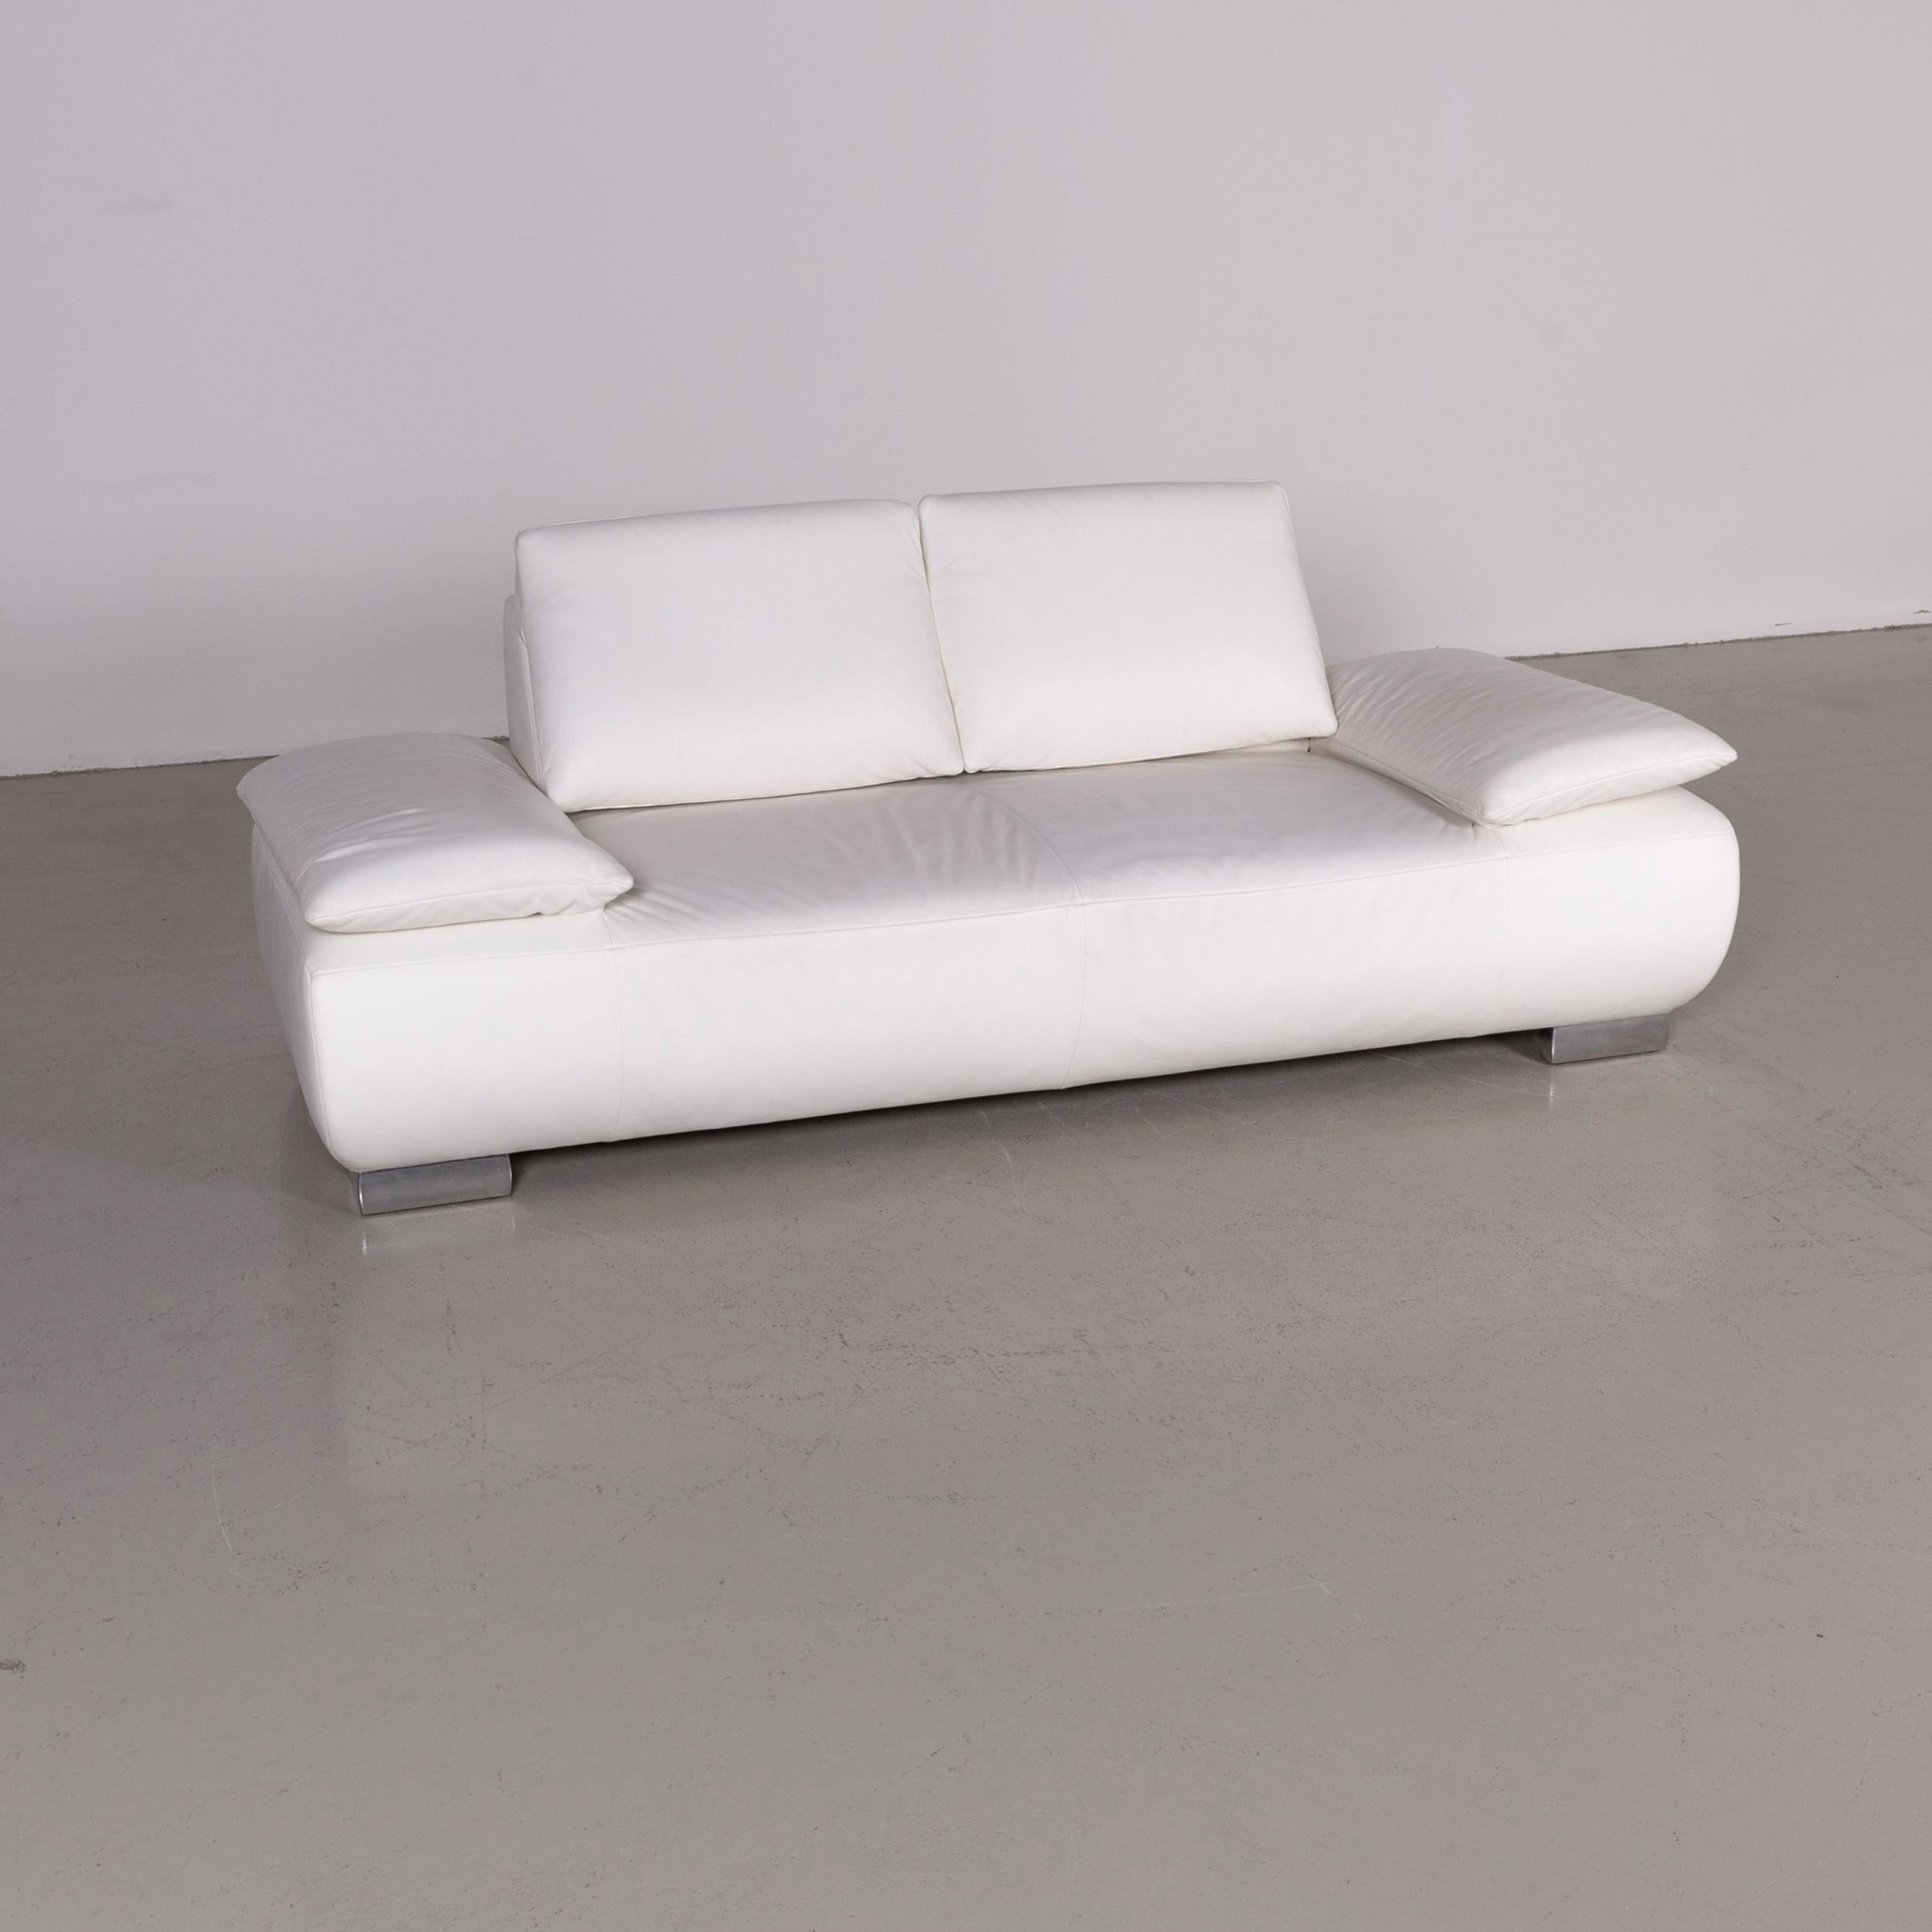 Koinor Volare designer leather sofa white two-seat couch.